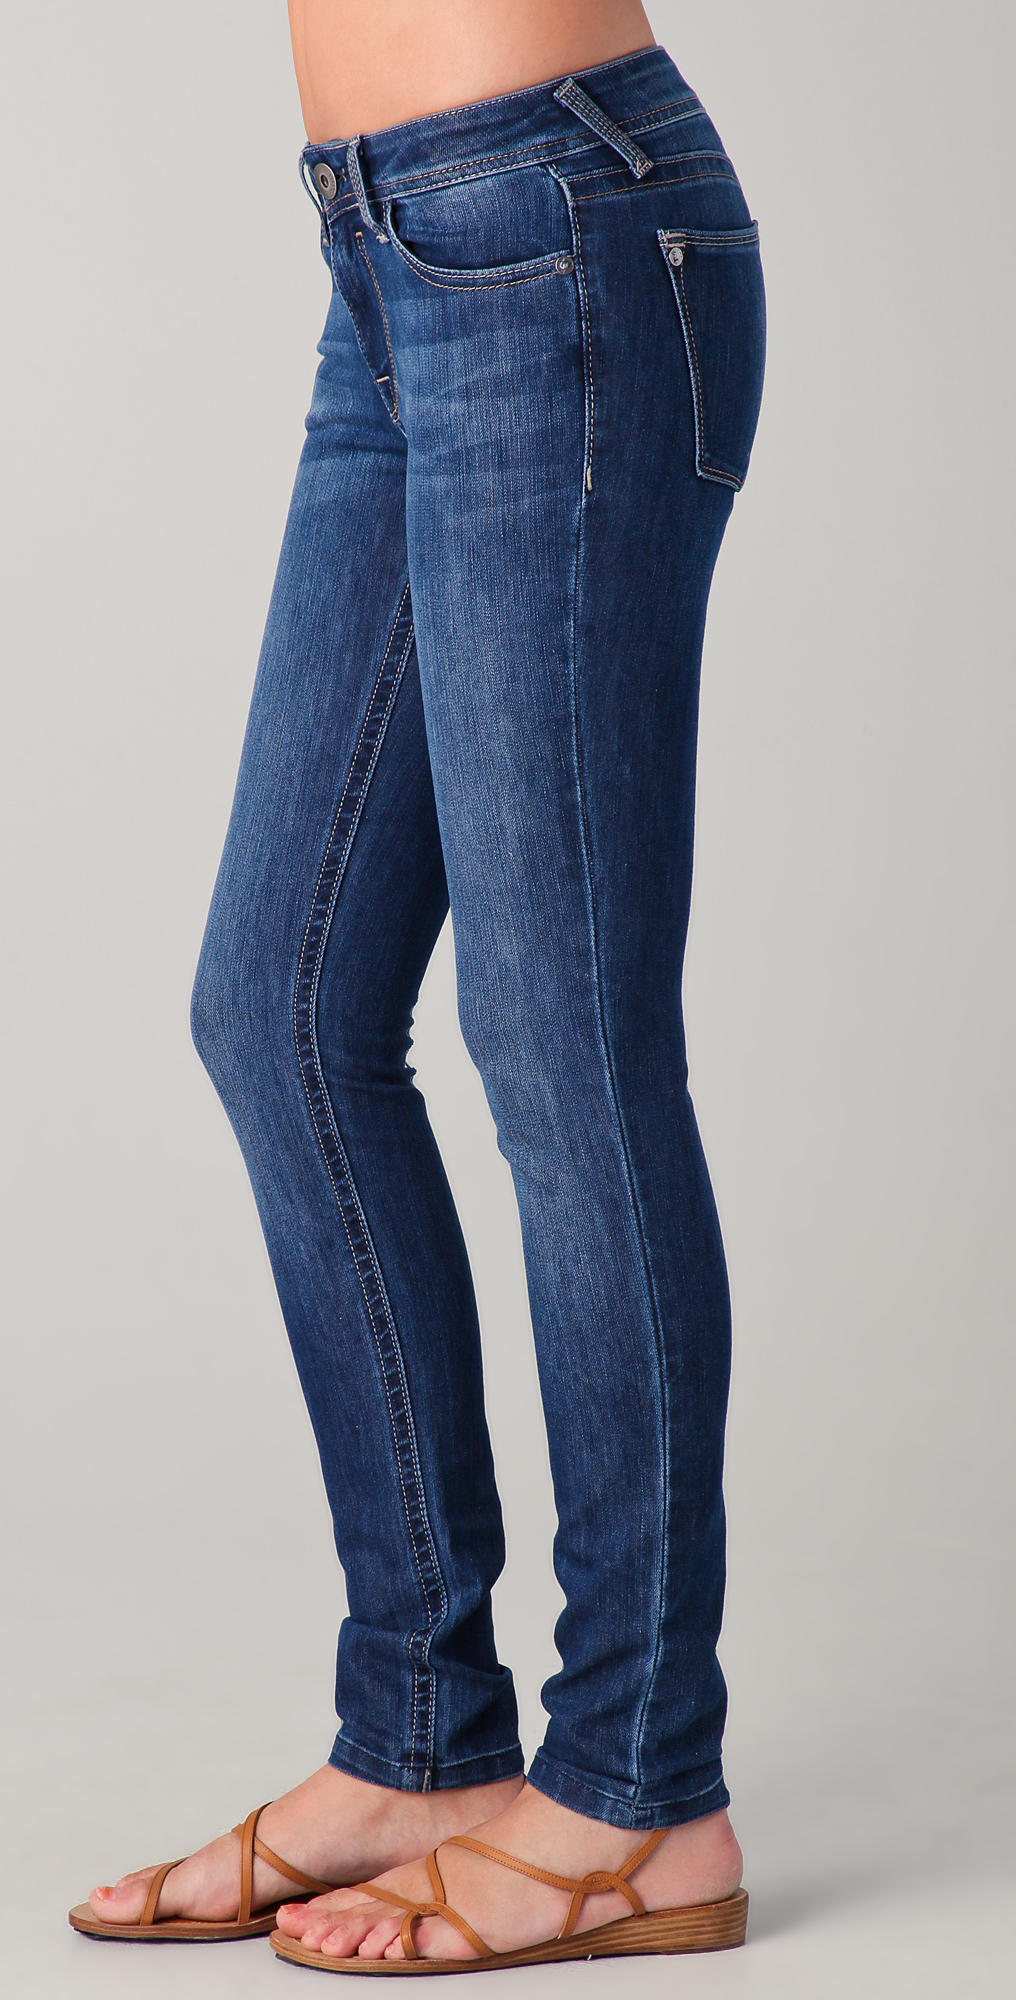 DL1961 Womens Amanda Skinny Jeans